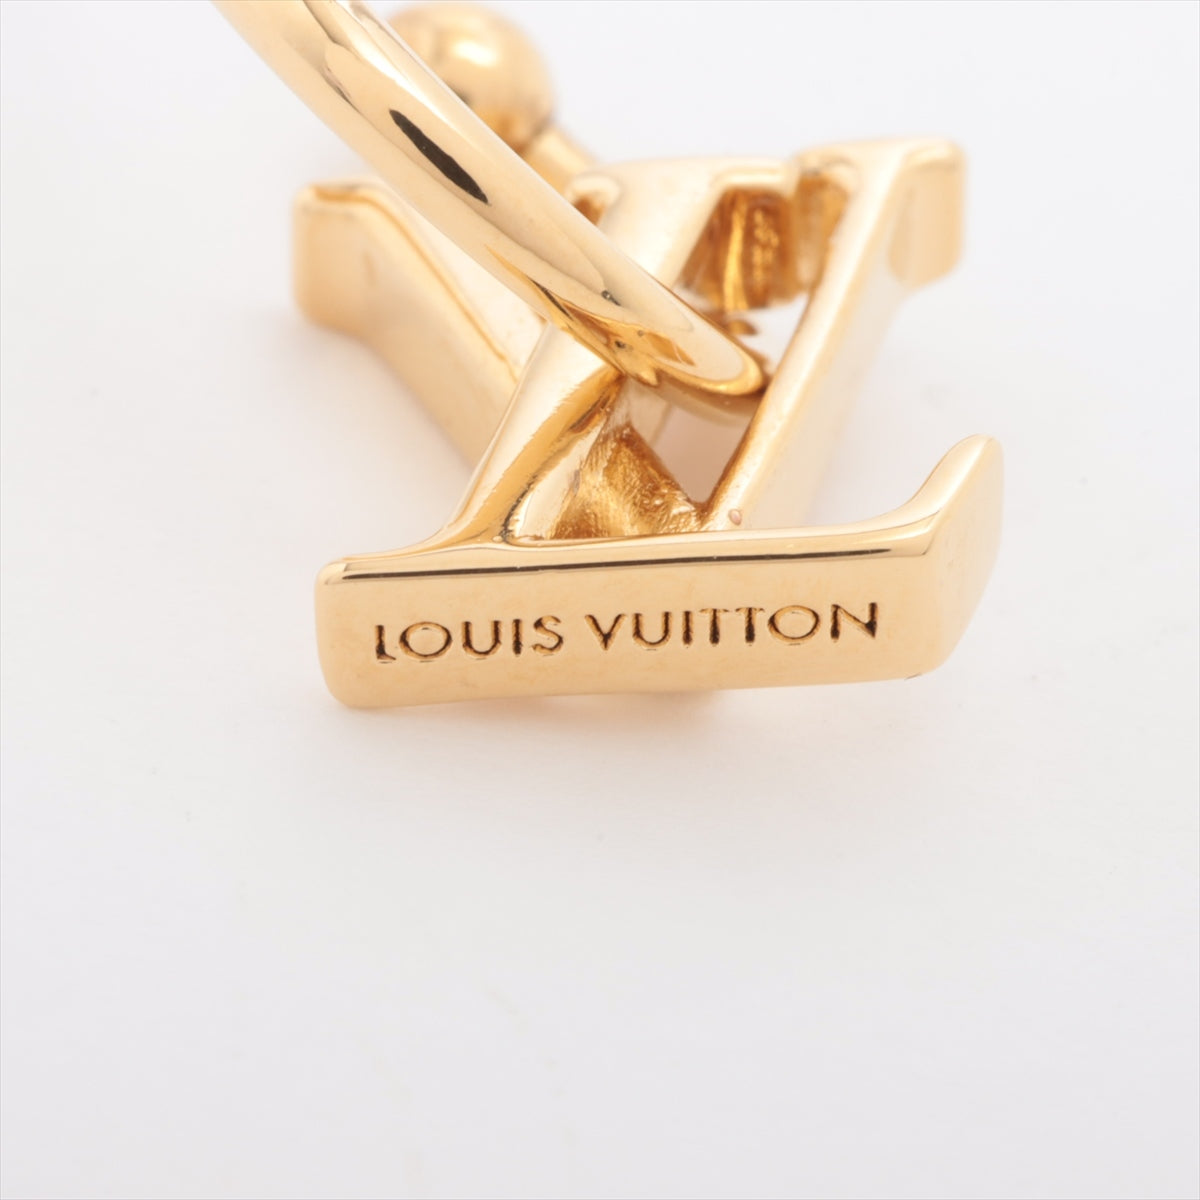 Louis Vuitton M01025 Piercing jewelry LV Floragram Set 3 GK3273 Piercing jewelry (for both ears) GP x Imitation pearl Gold